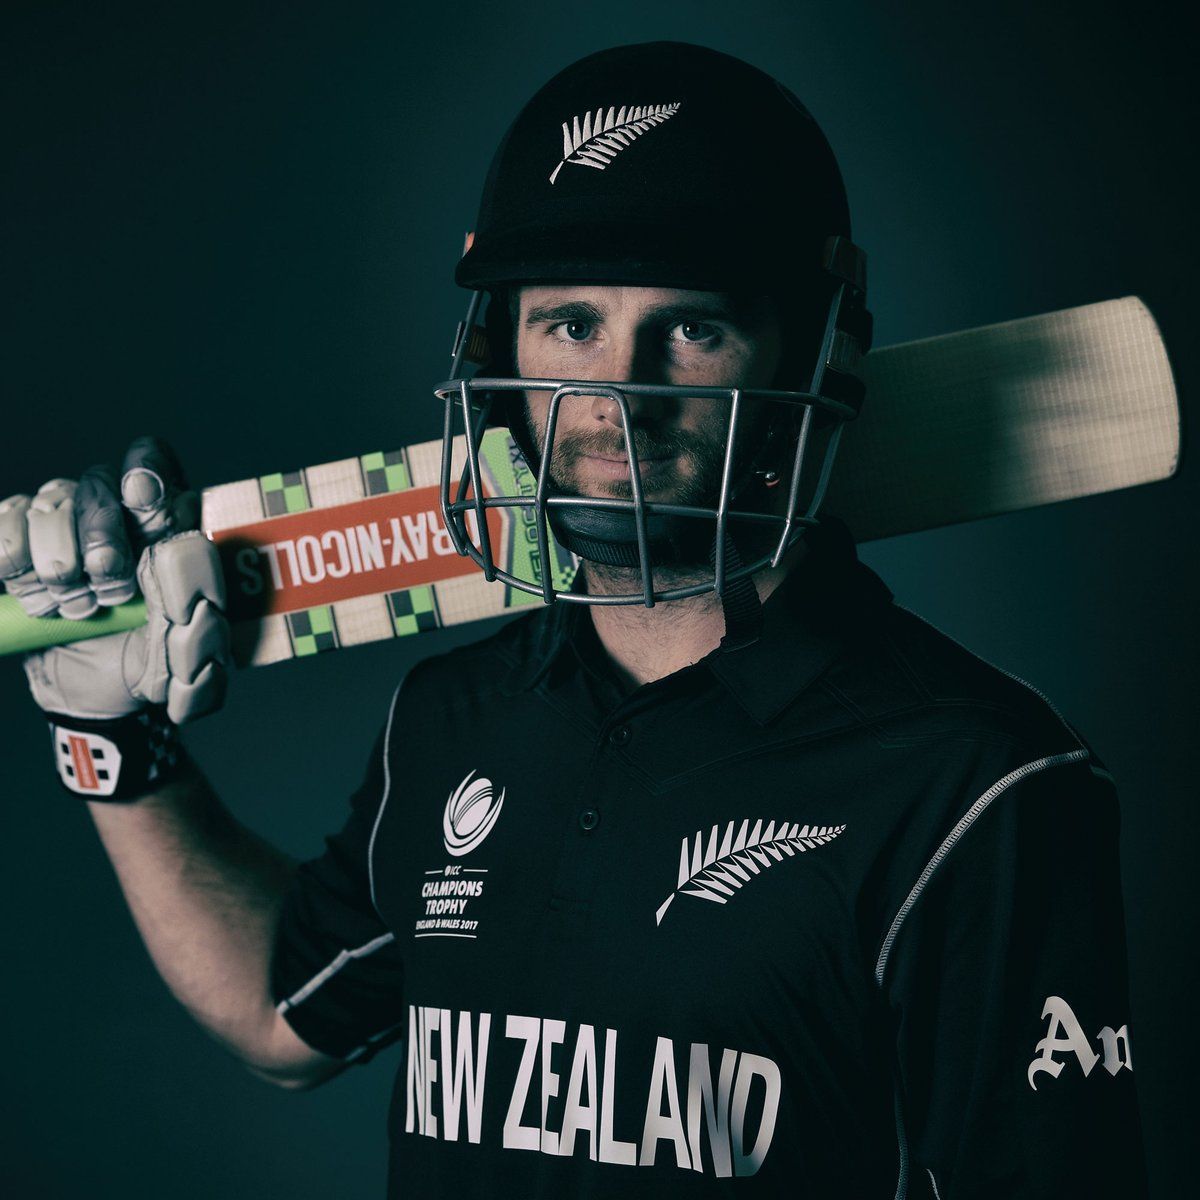 New Zealand Cricket Wallpaper Free New Zealand Cricket Background